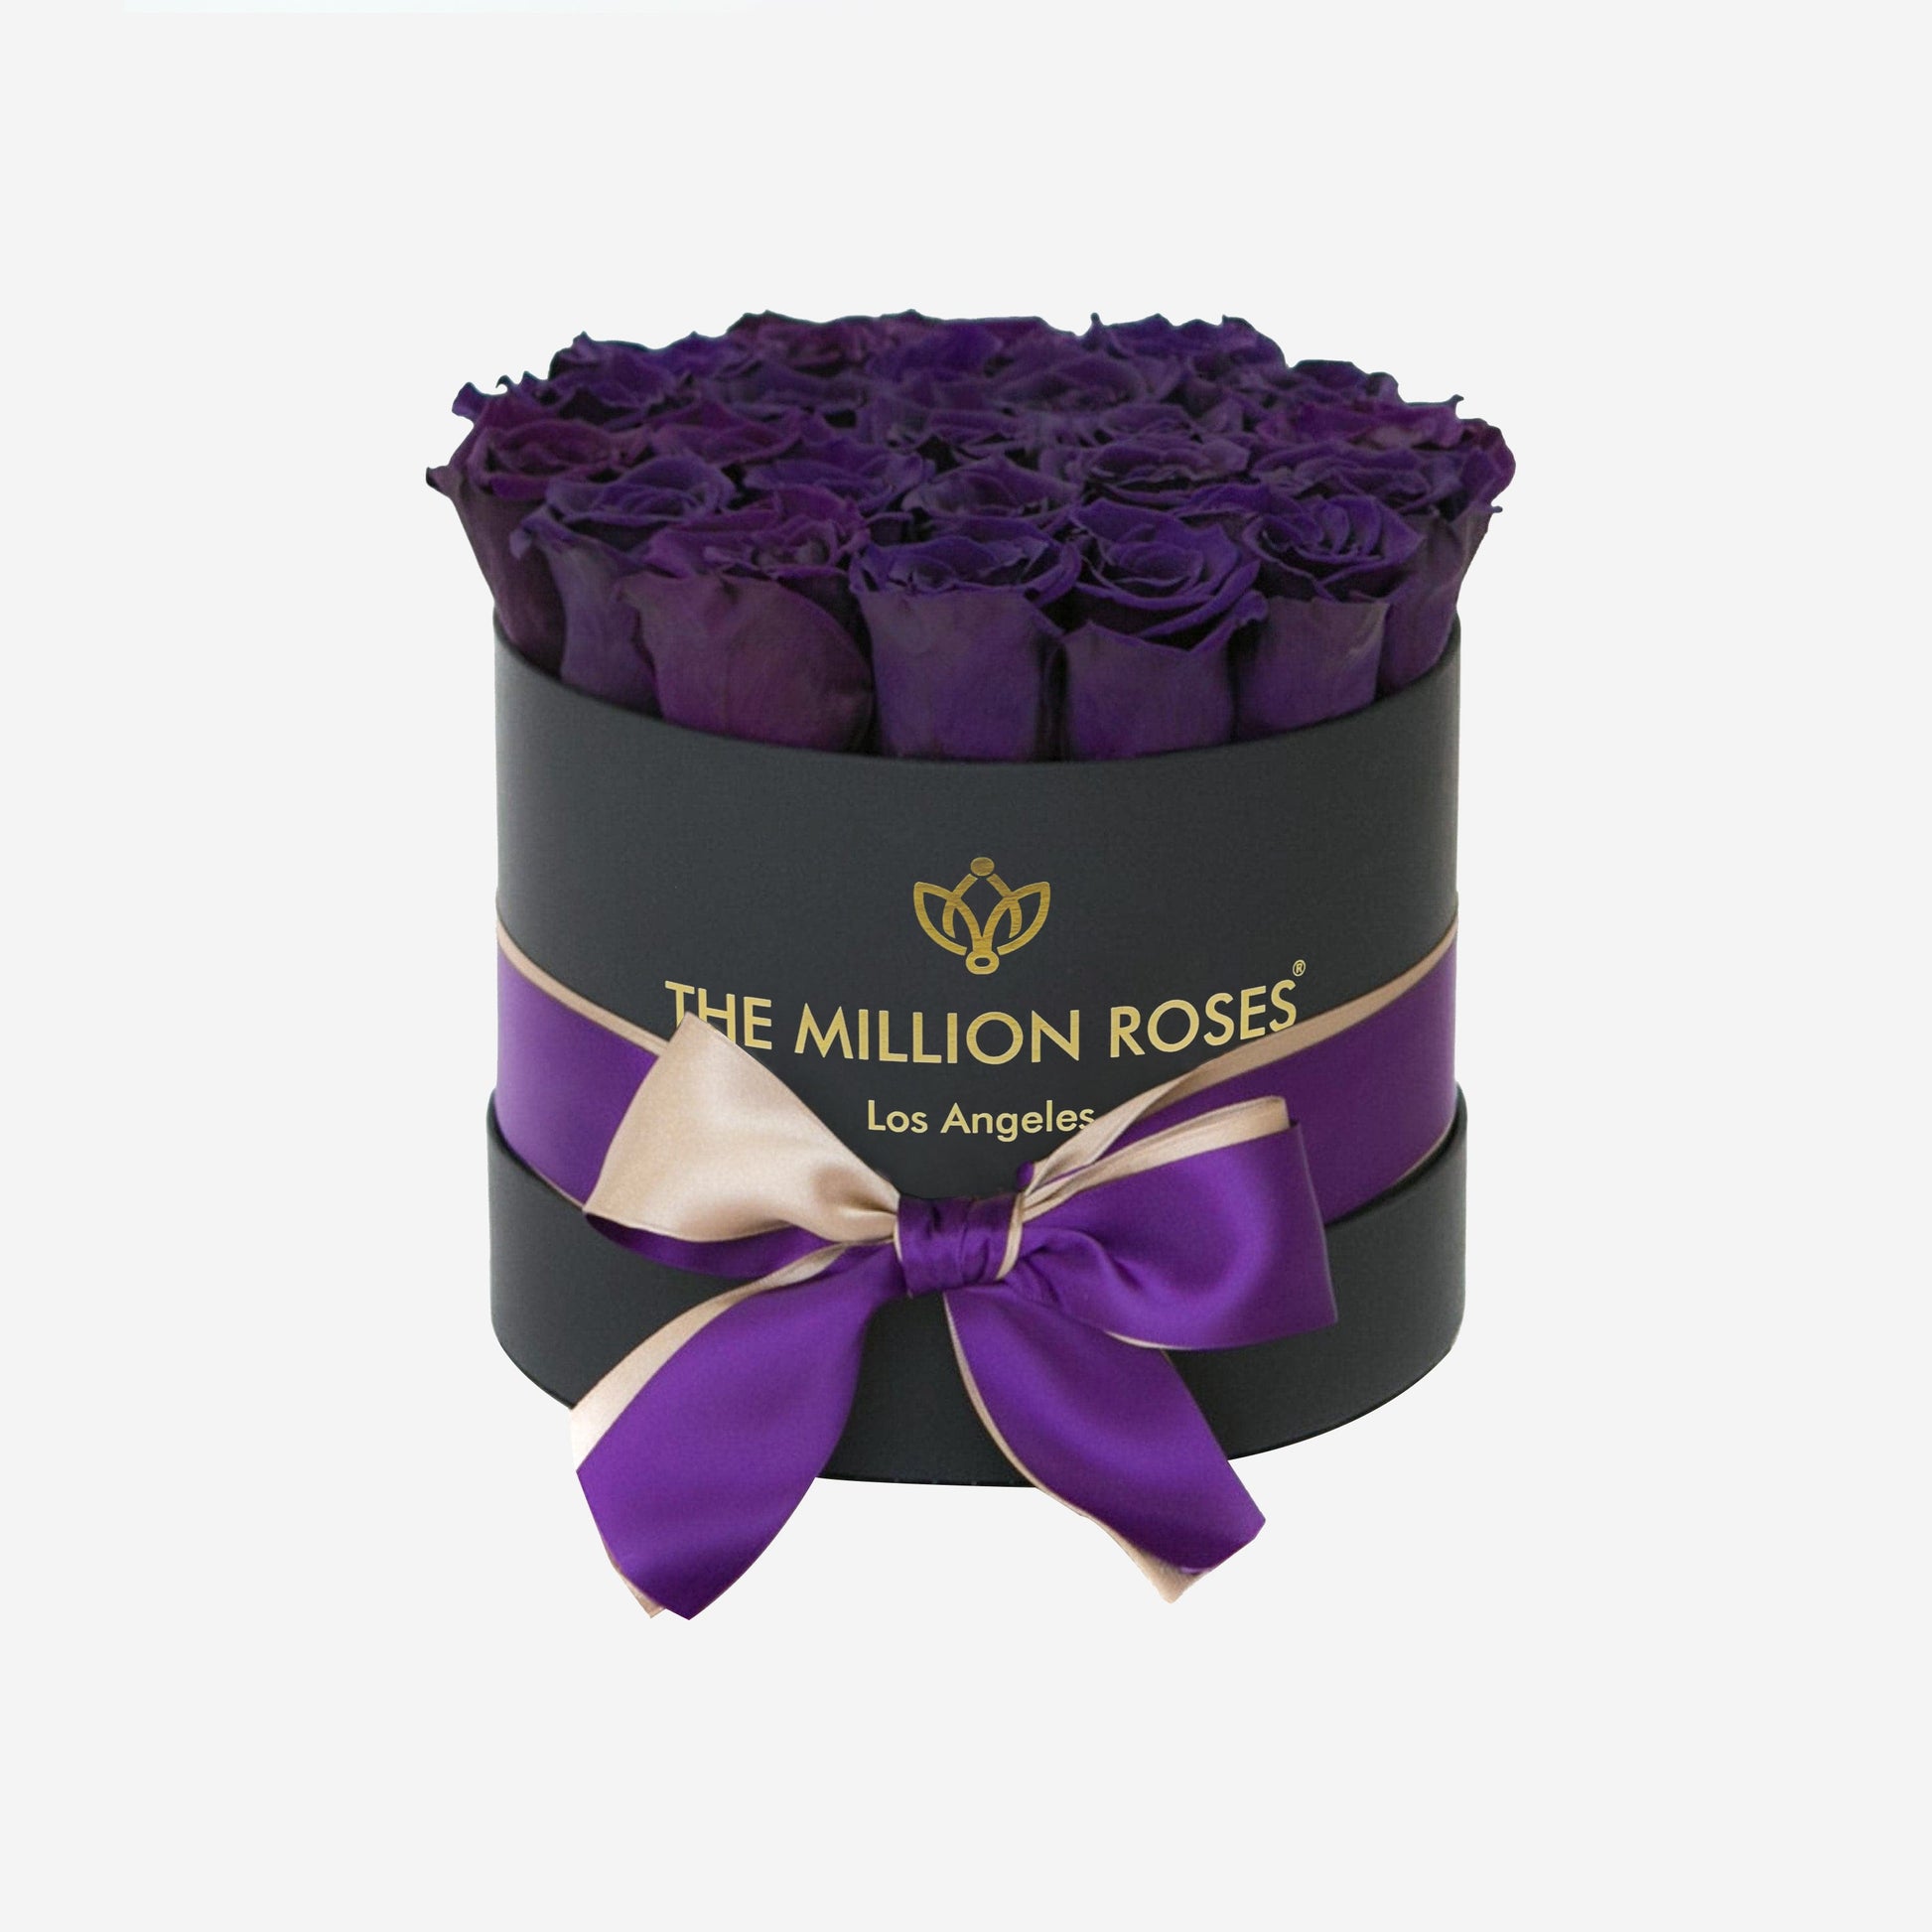 Classic Black Box | Dark Purple Roses - The Million Roses